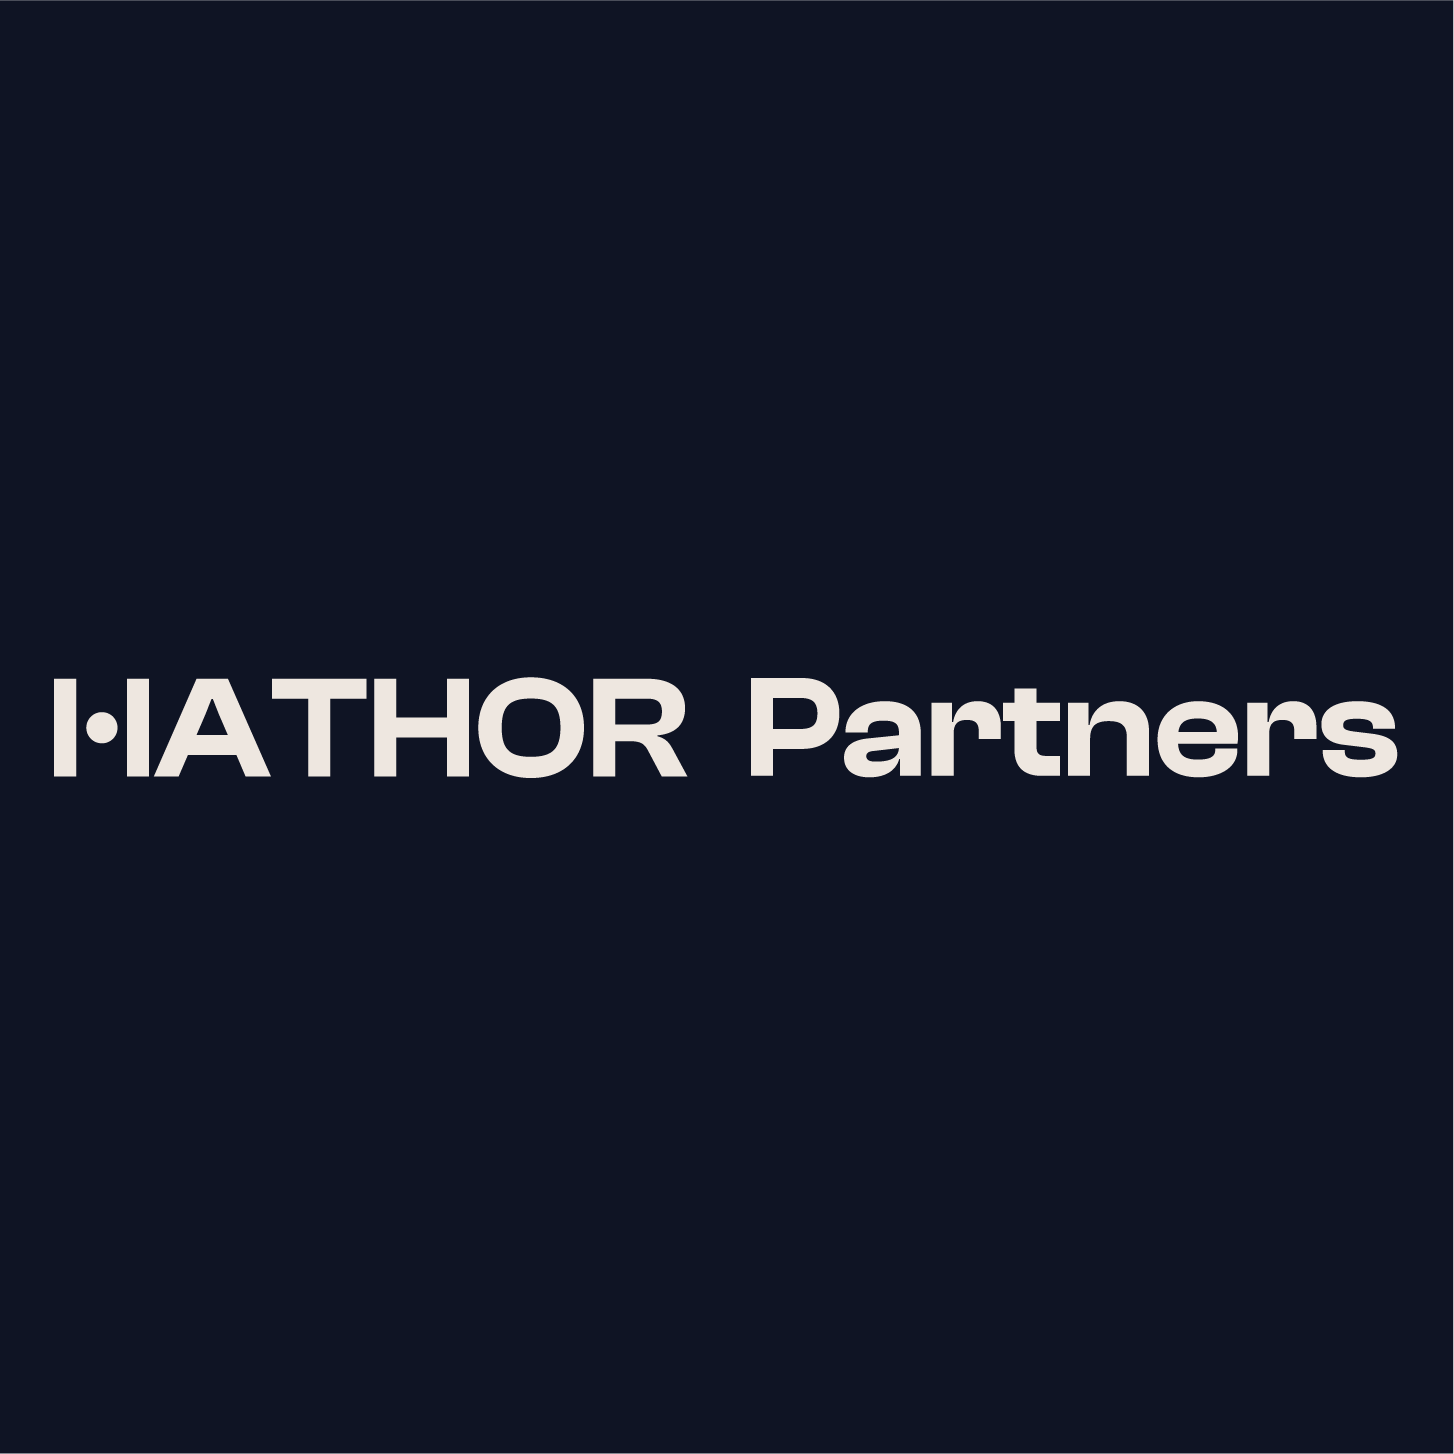 Hathor Partners